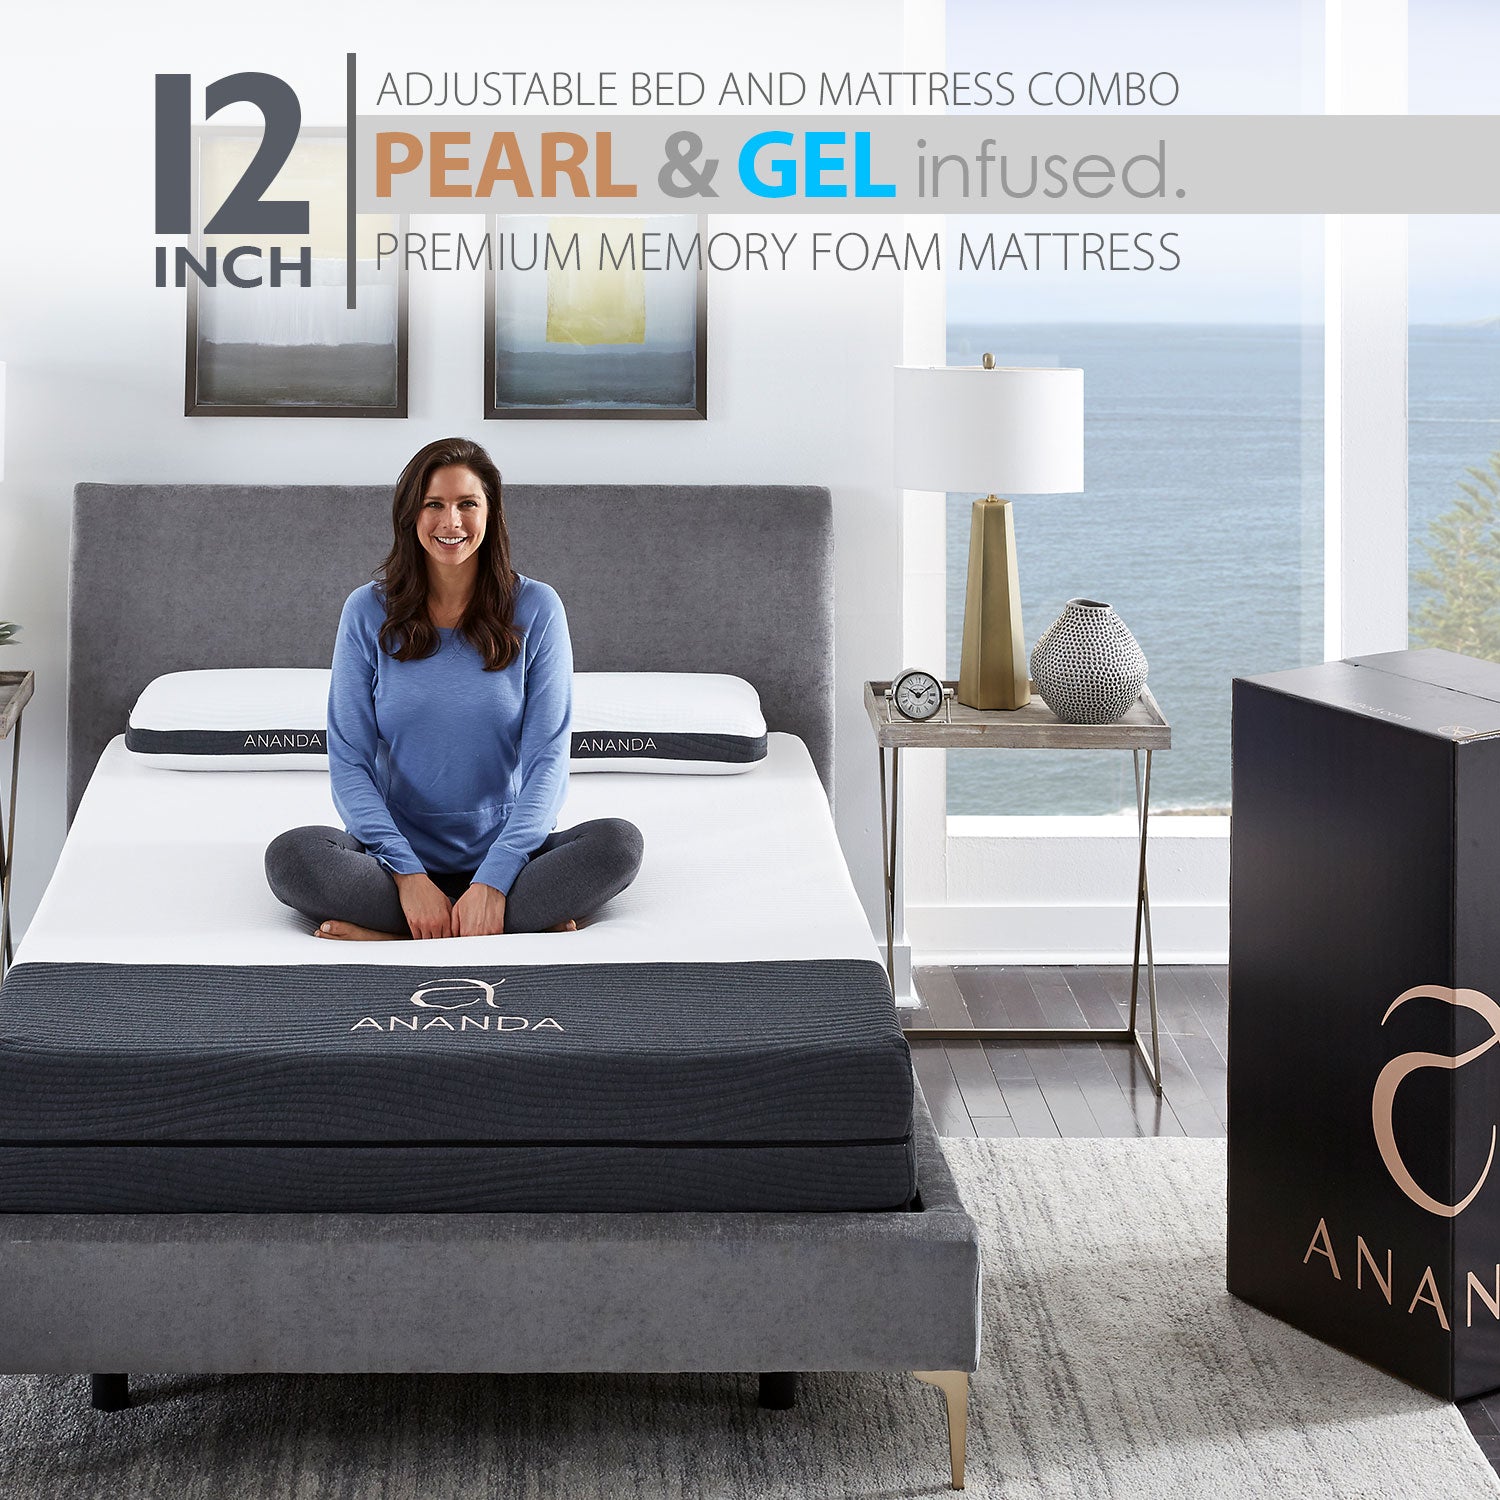 Ananda Sleep Medium Firm 12” Pearl & Cool Gel Infused Memory Foam Mattress & Adjustable Bed Frame - BlissfulNights.com